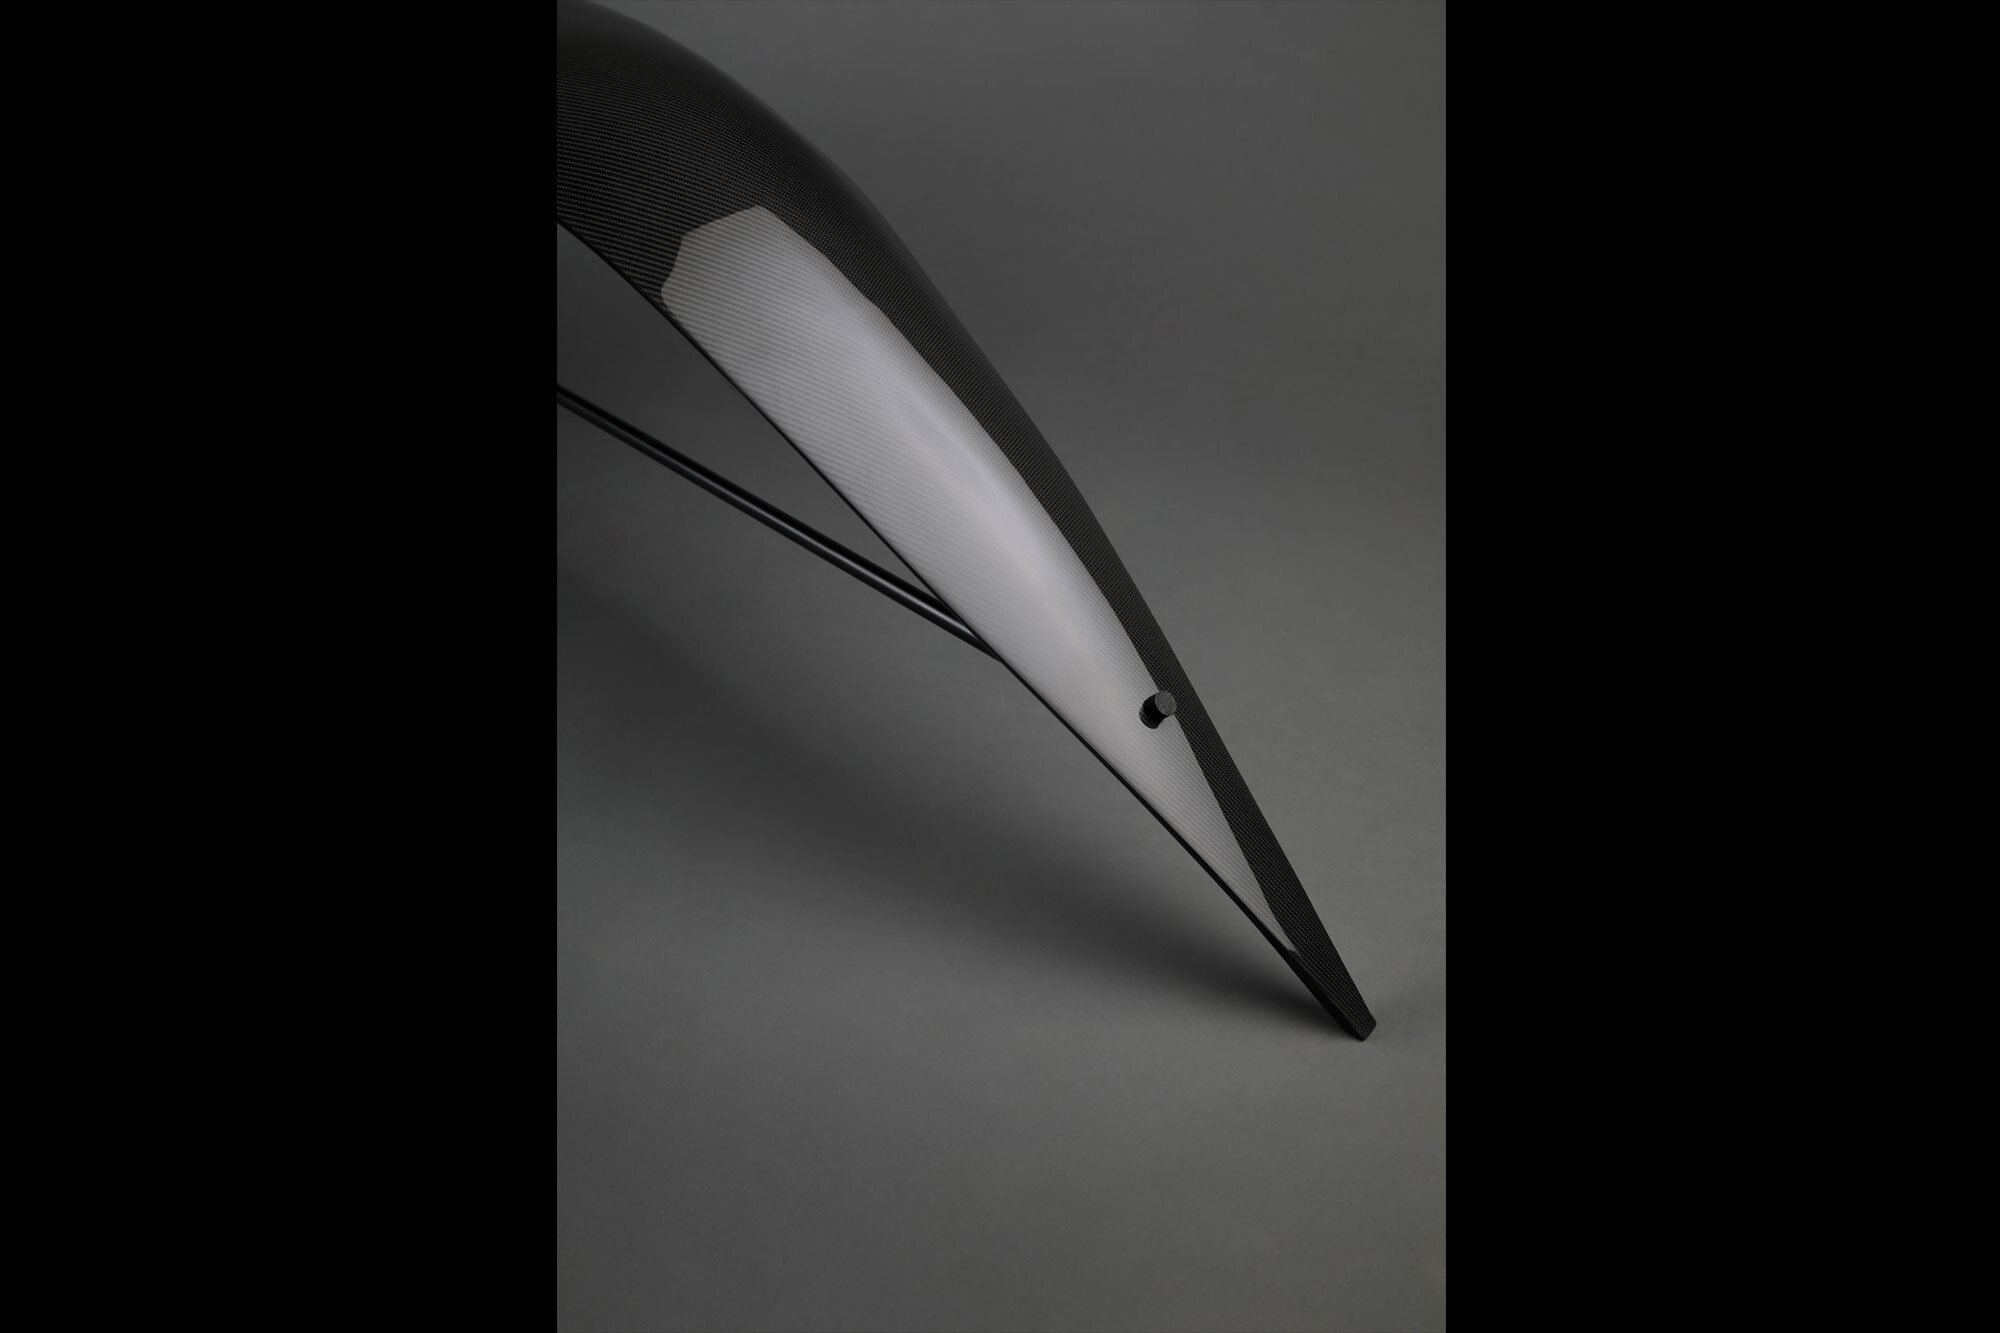 Ant-Bench-Website5-madheke-carbon fibre-versatility-strength-curved-sleek.jpg